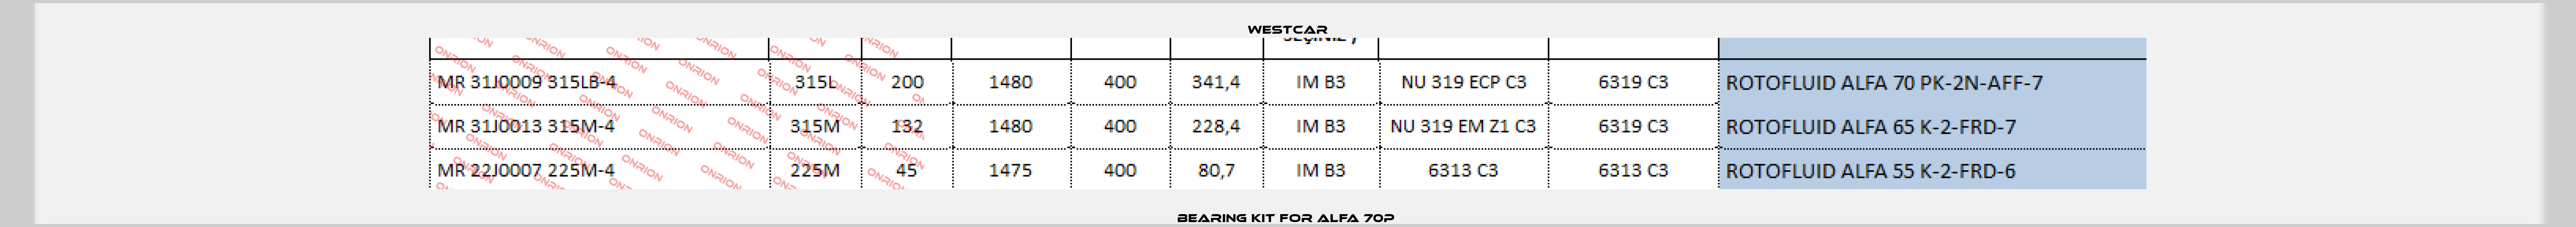 Bearing kit for Alfa 70P  Westcar